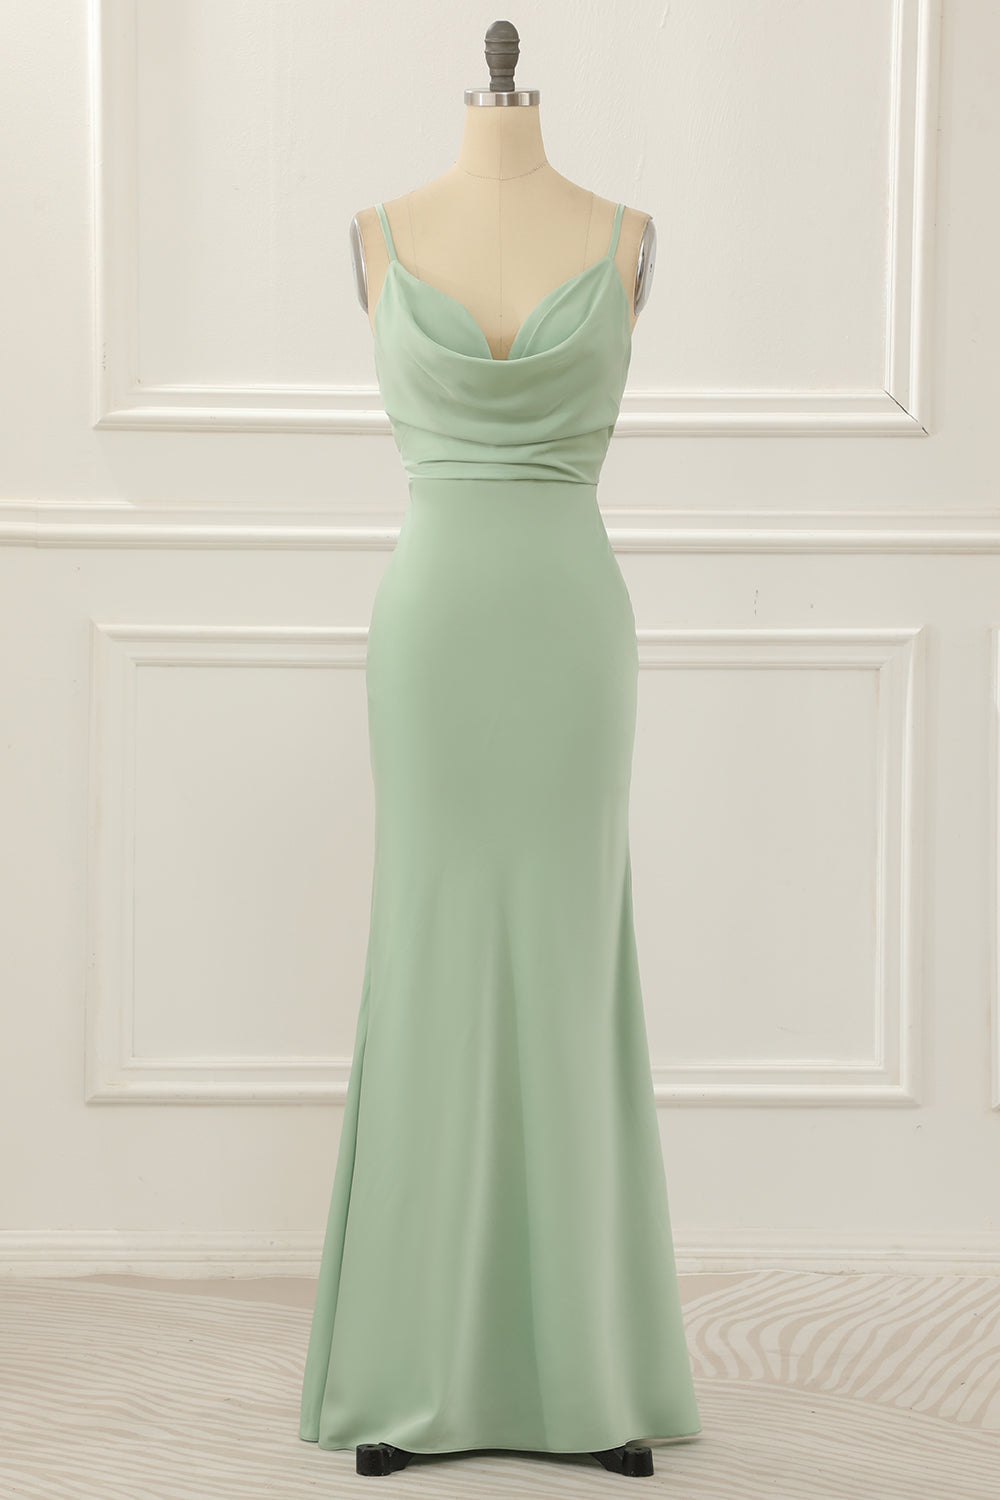 Bridesmaid Dress Long Sleeve, Satin Spaghetti Straps Light Green Bridesmaid Dress